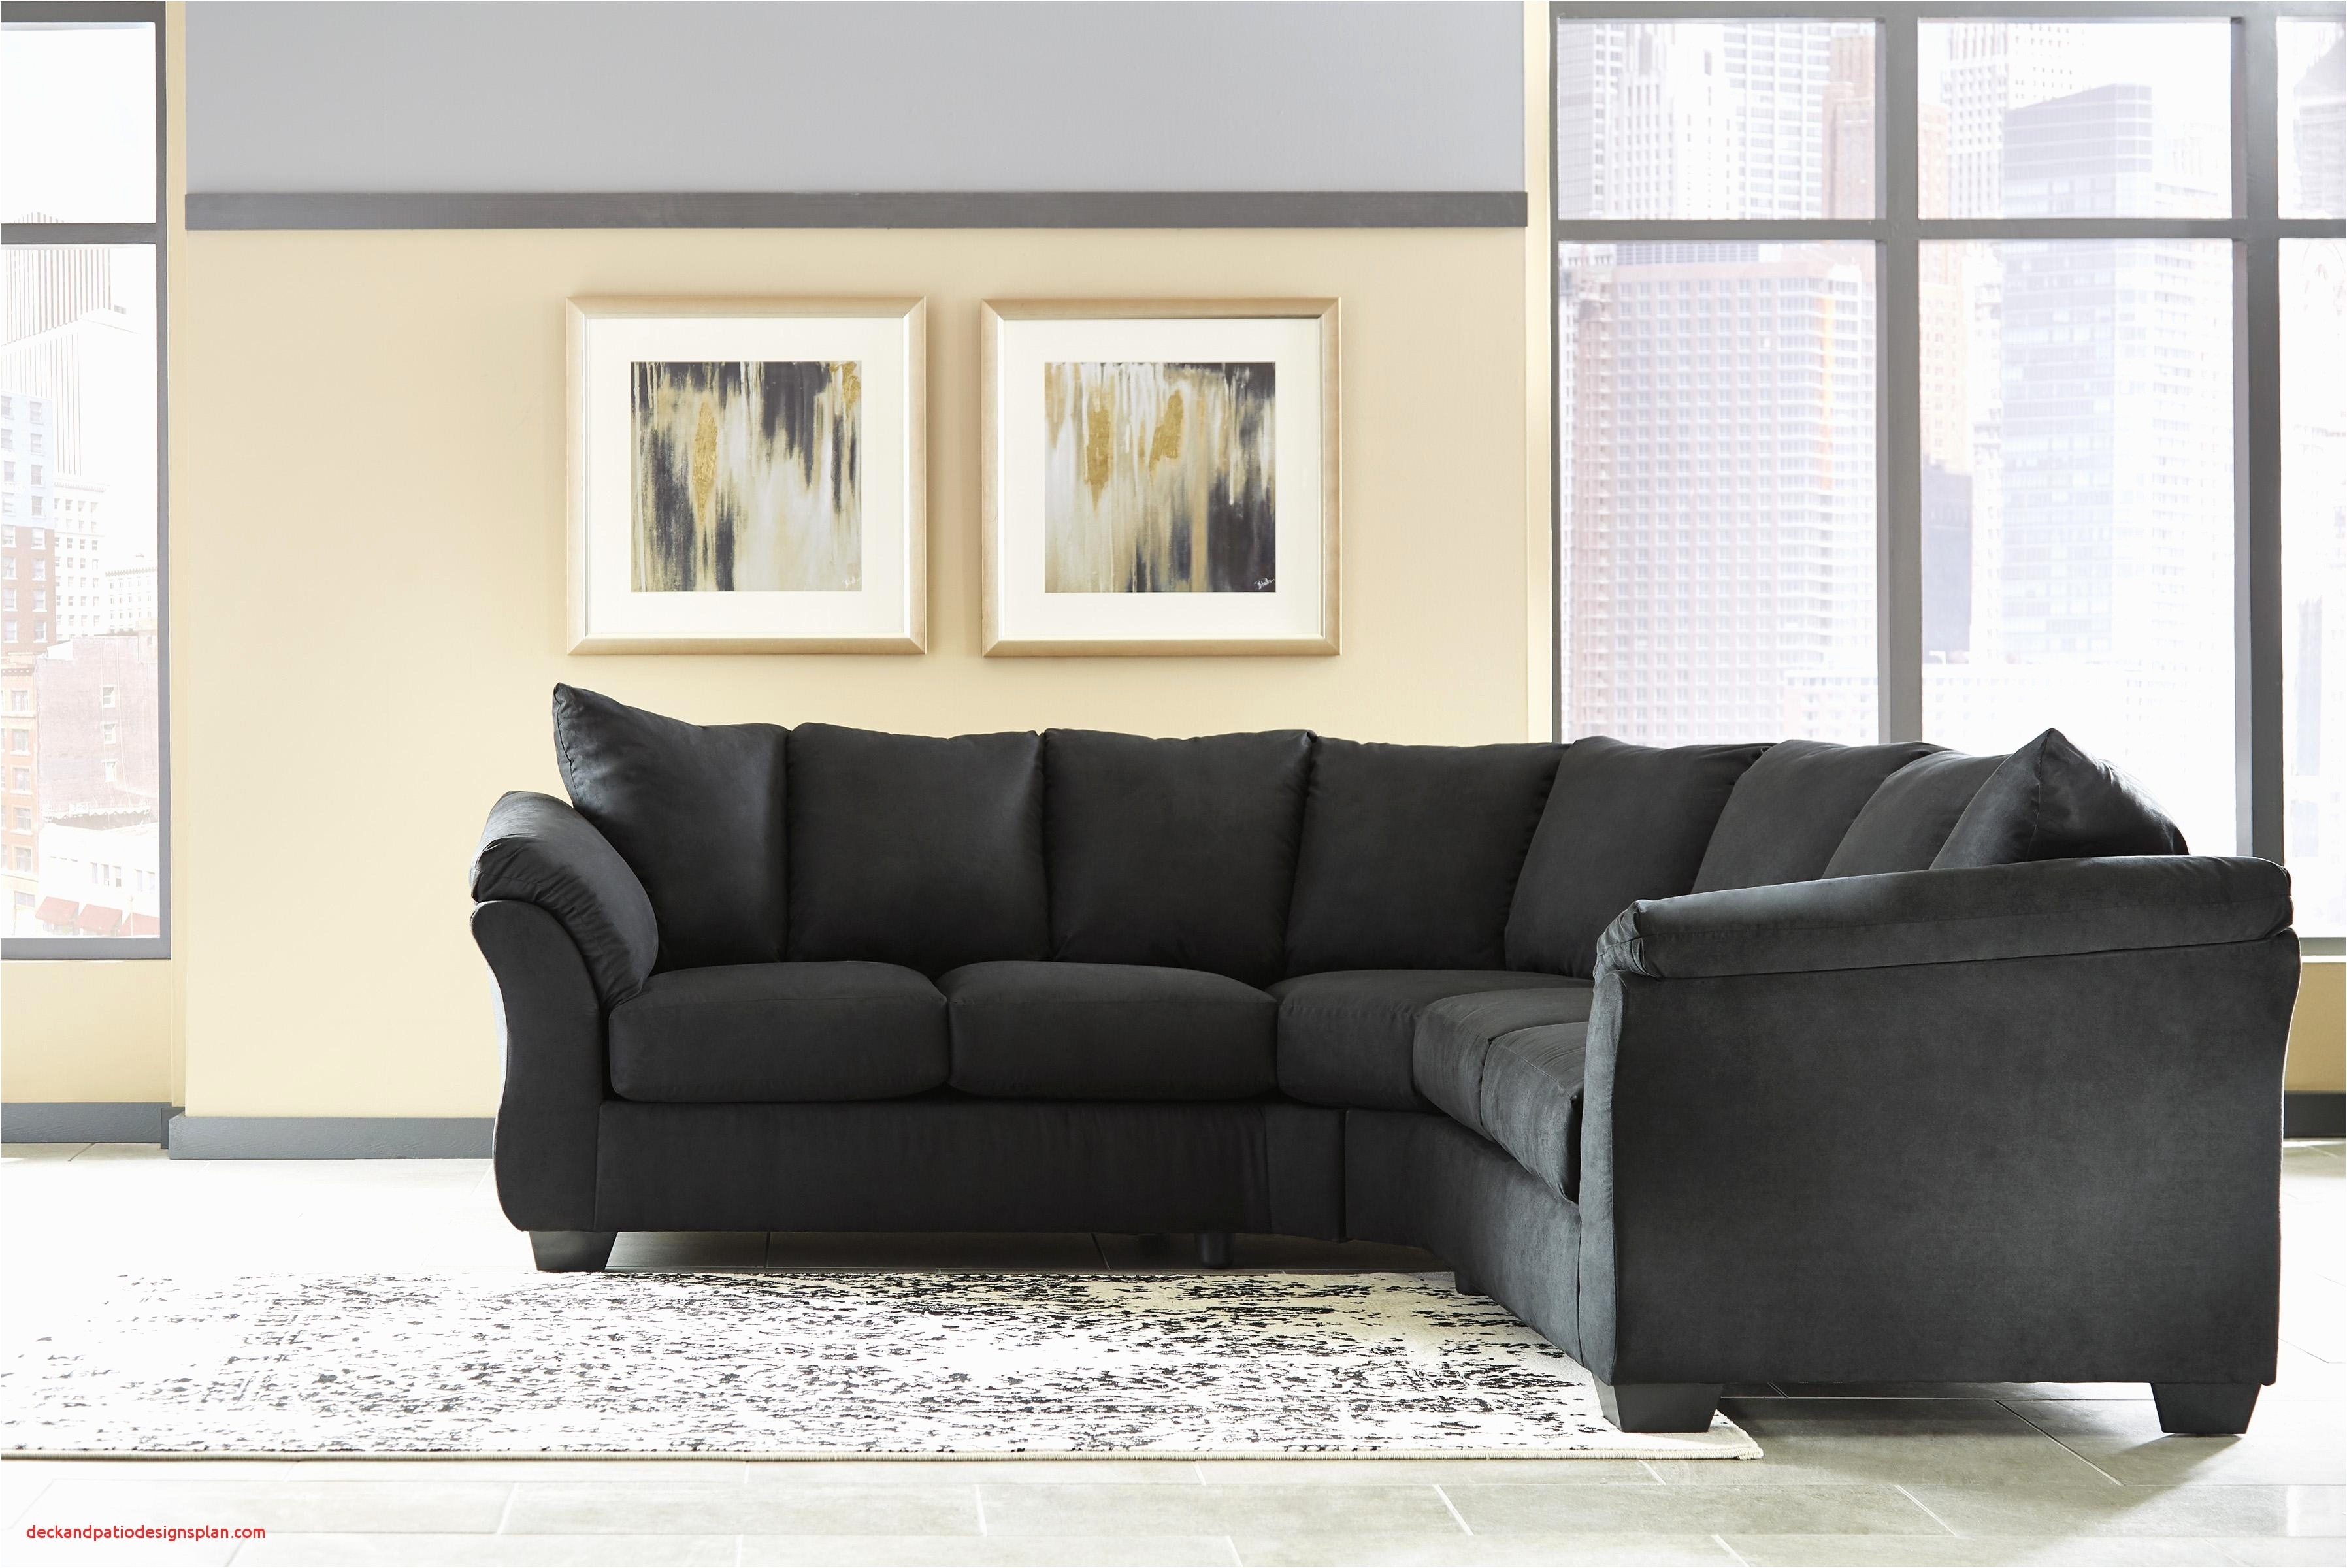 catchy macys home furniture in sofa chairs inspirational gunstiges big gunstige macys furniture 0d